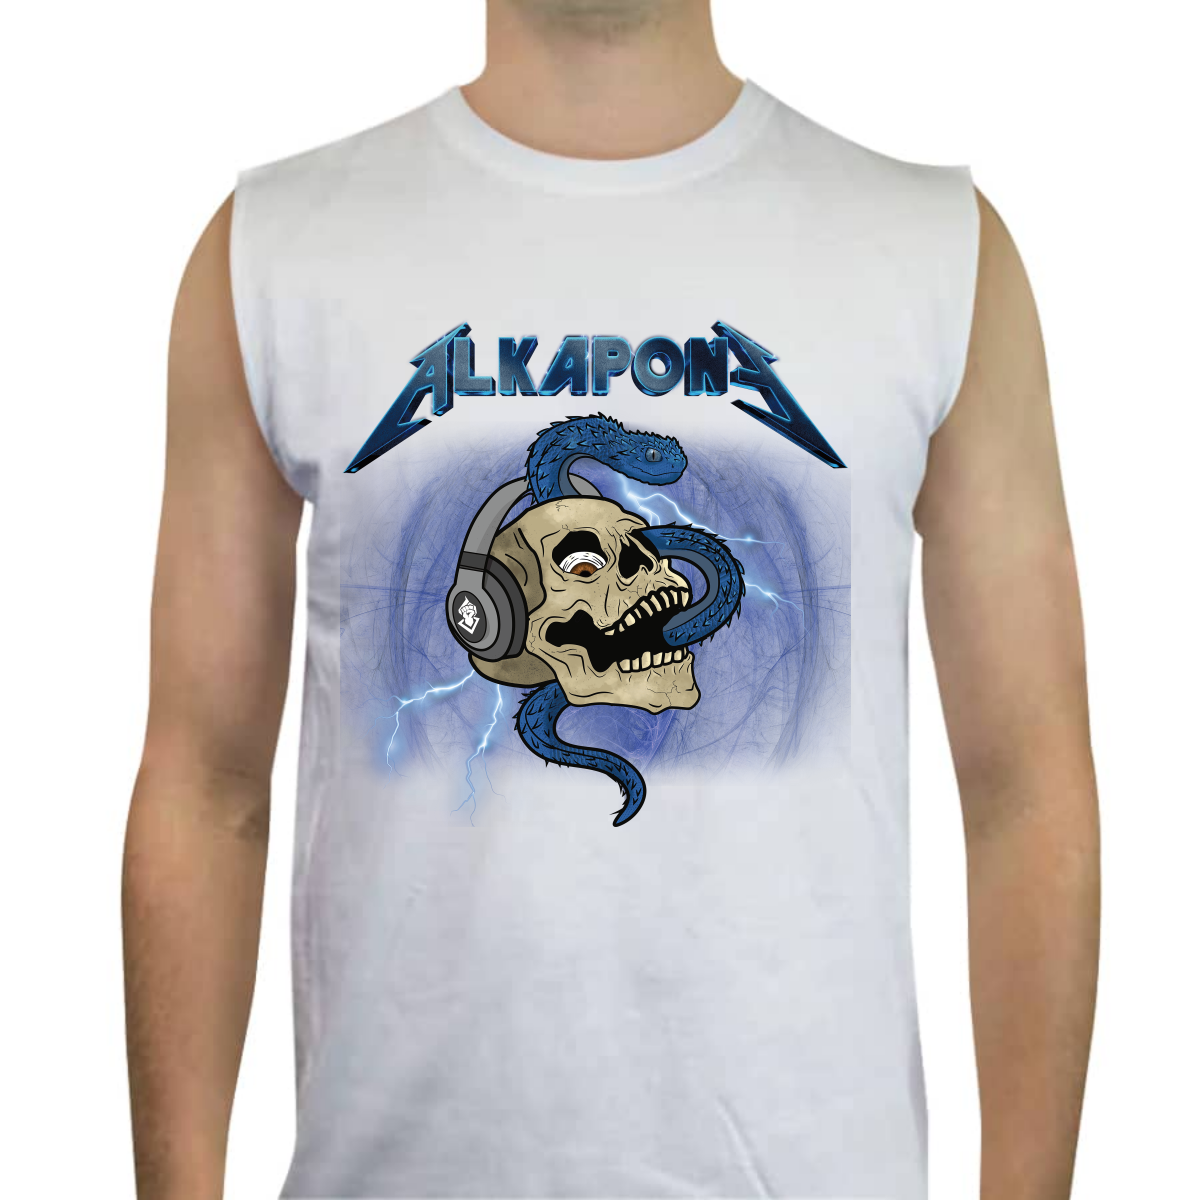 Camiseta tank top alkapone metalica rayo con craneo